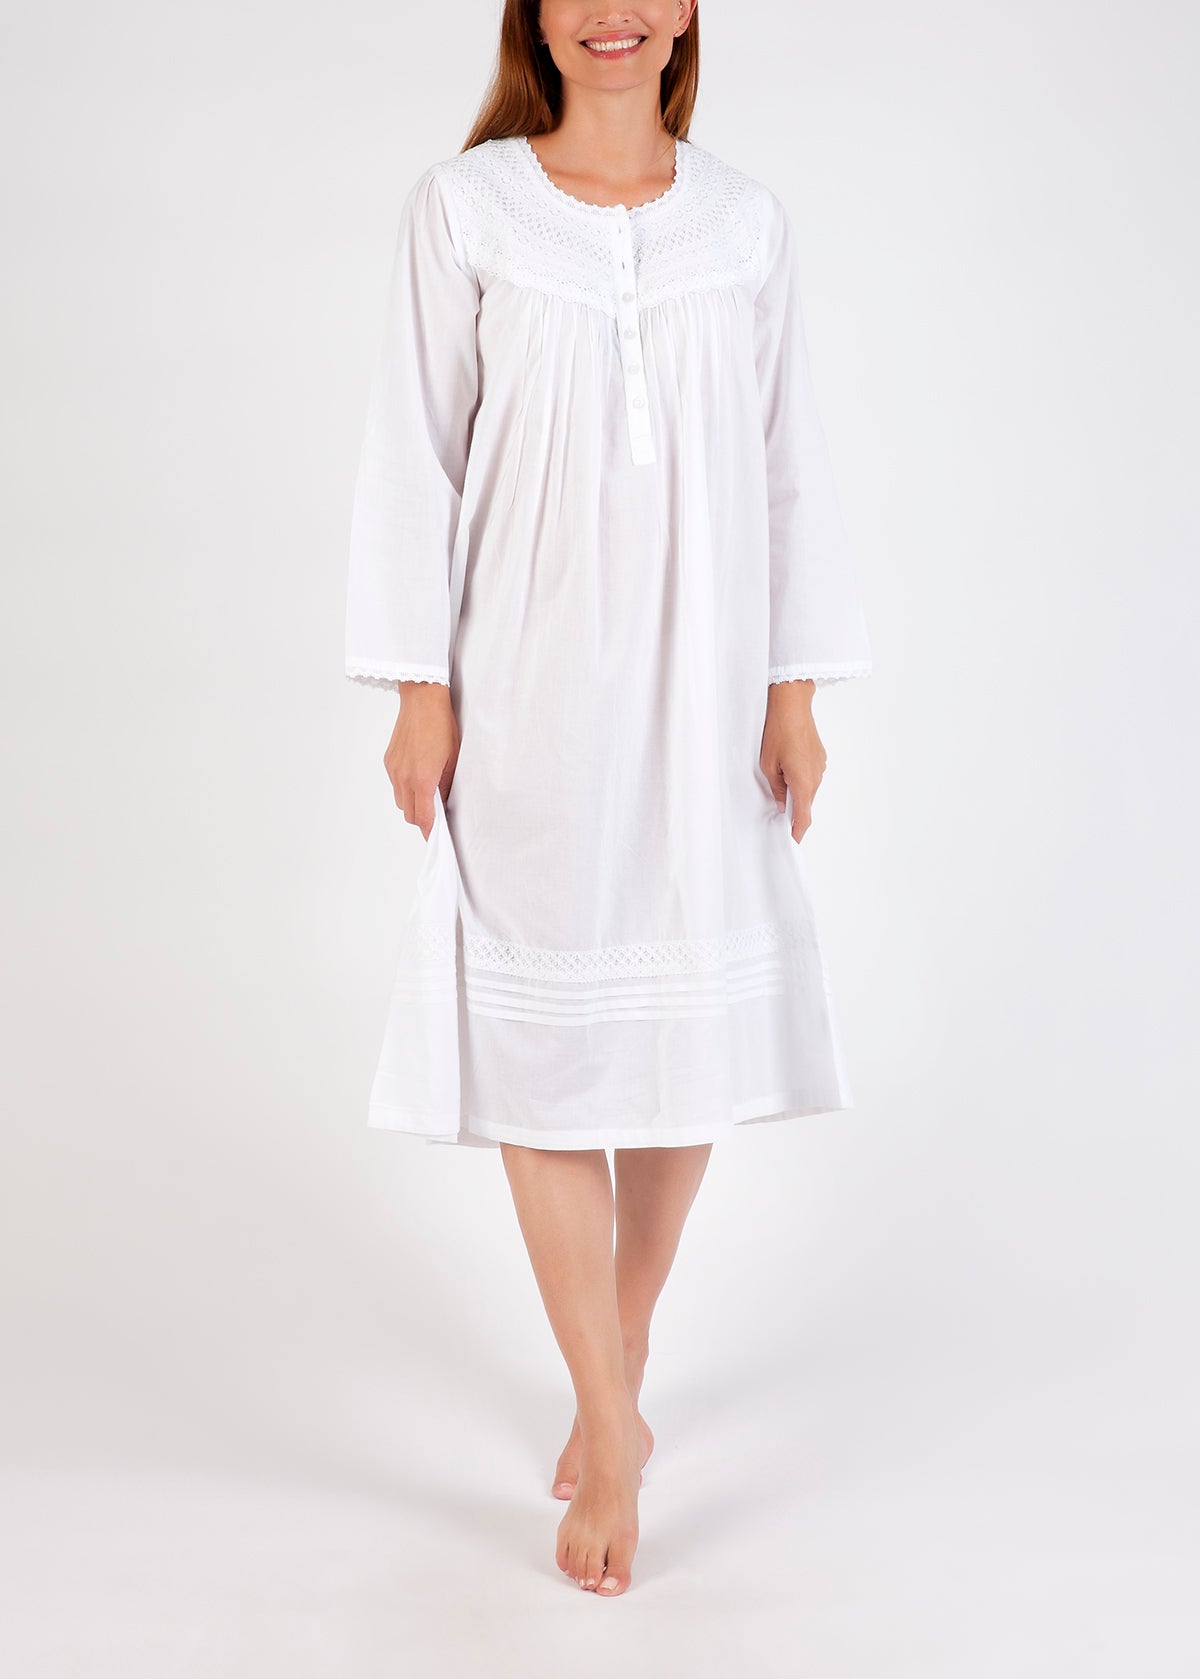 Arabella 100% Cotton Night Dress Long Sleeved White